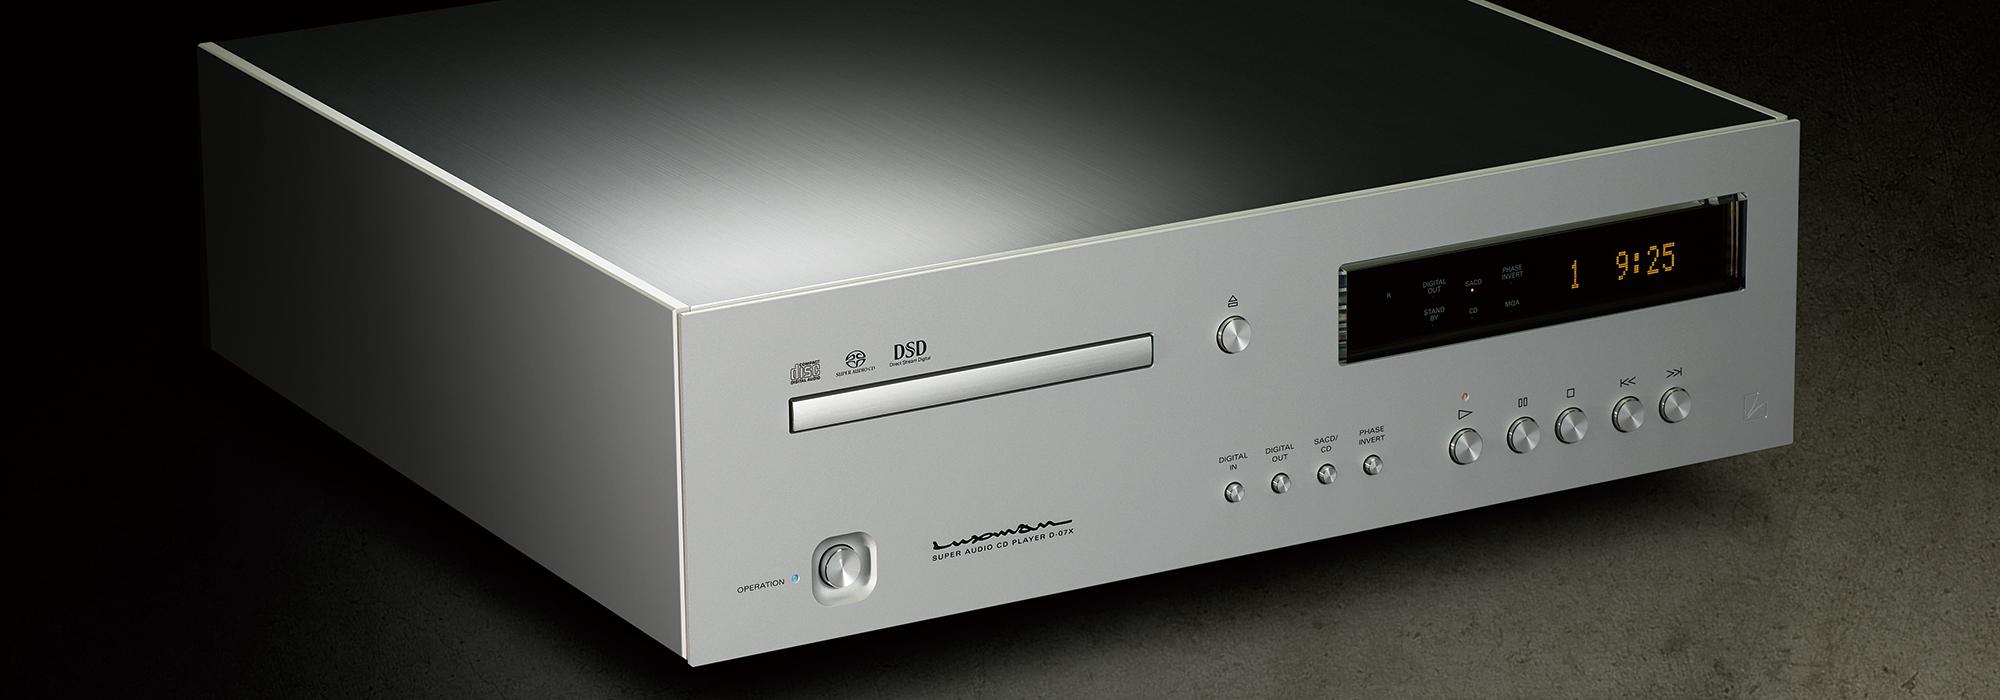 CD/SACD player offers pristine performance and shimmering elegance. 74b21de9 02 maind